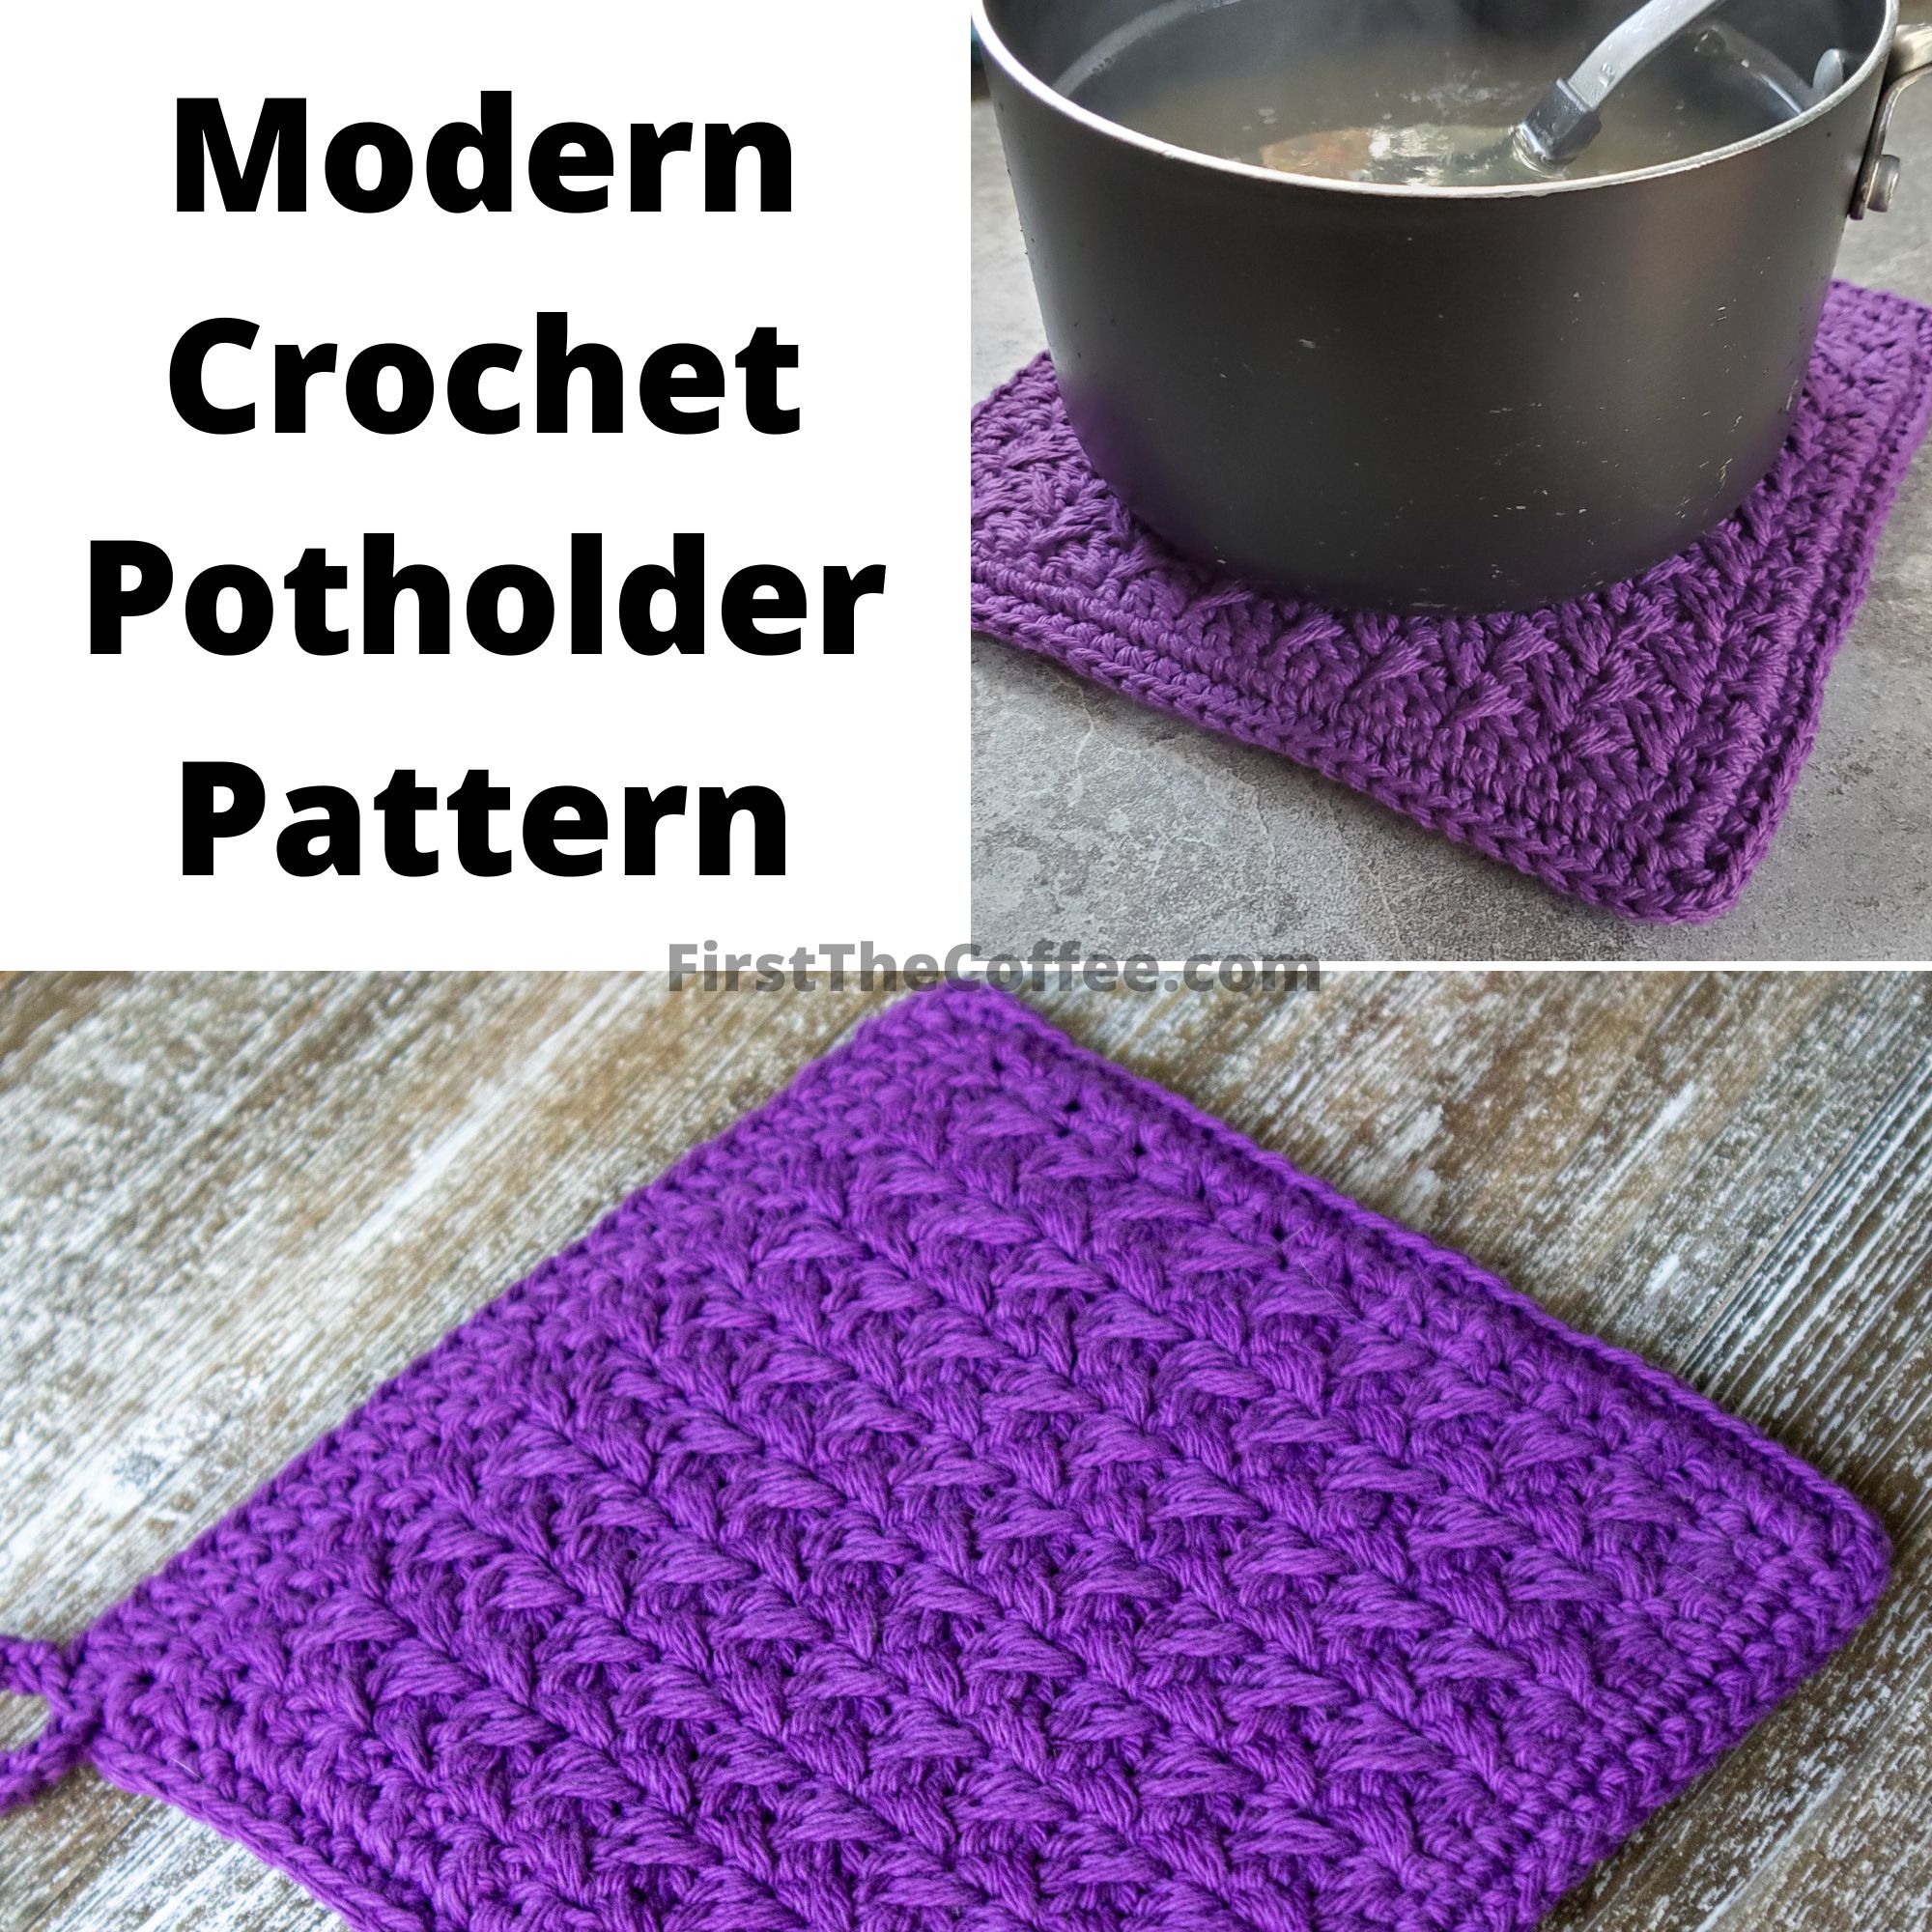 Crochet Potholder with pot sitting on it.